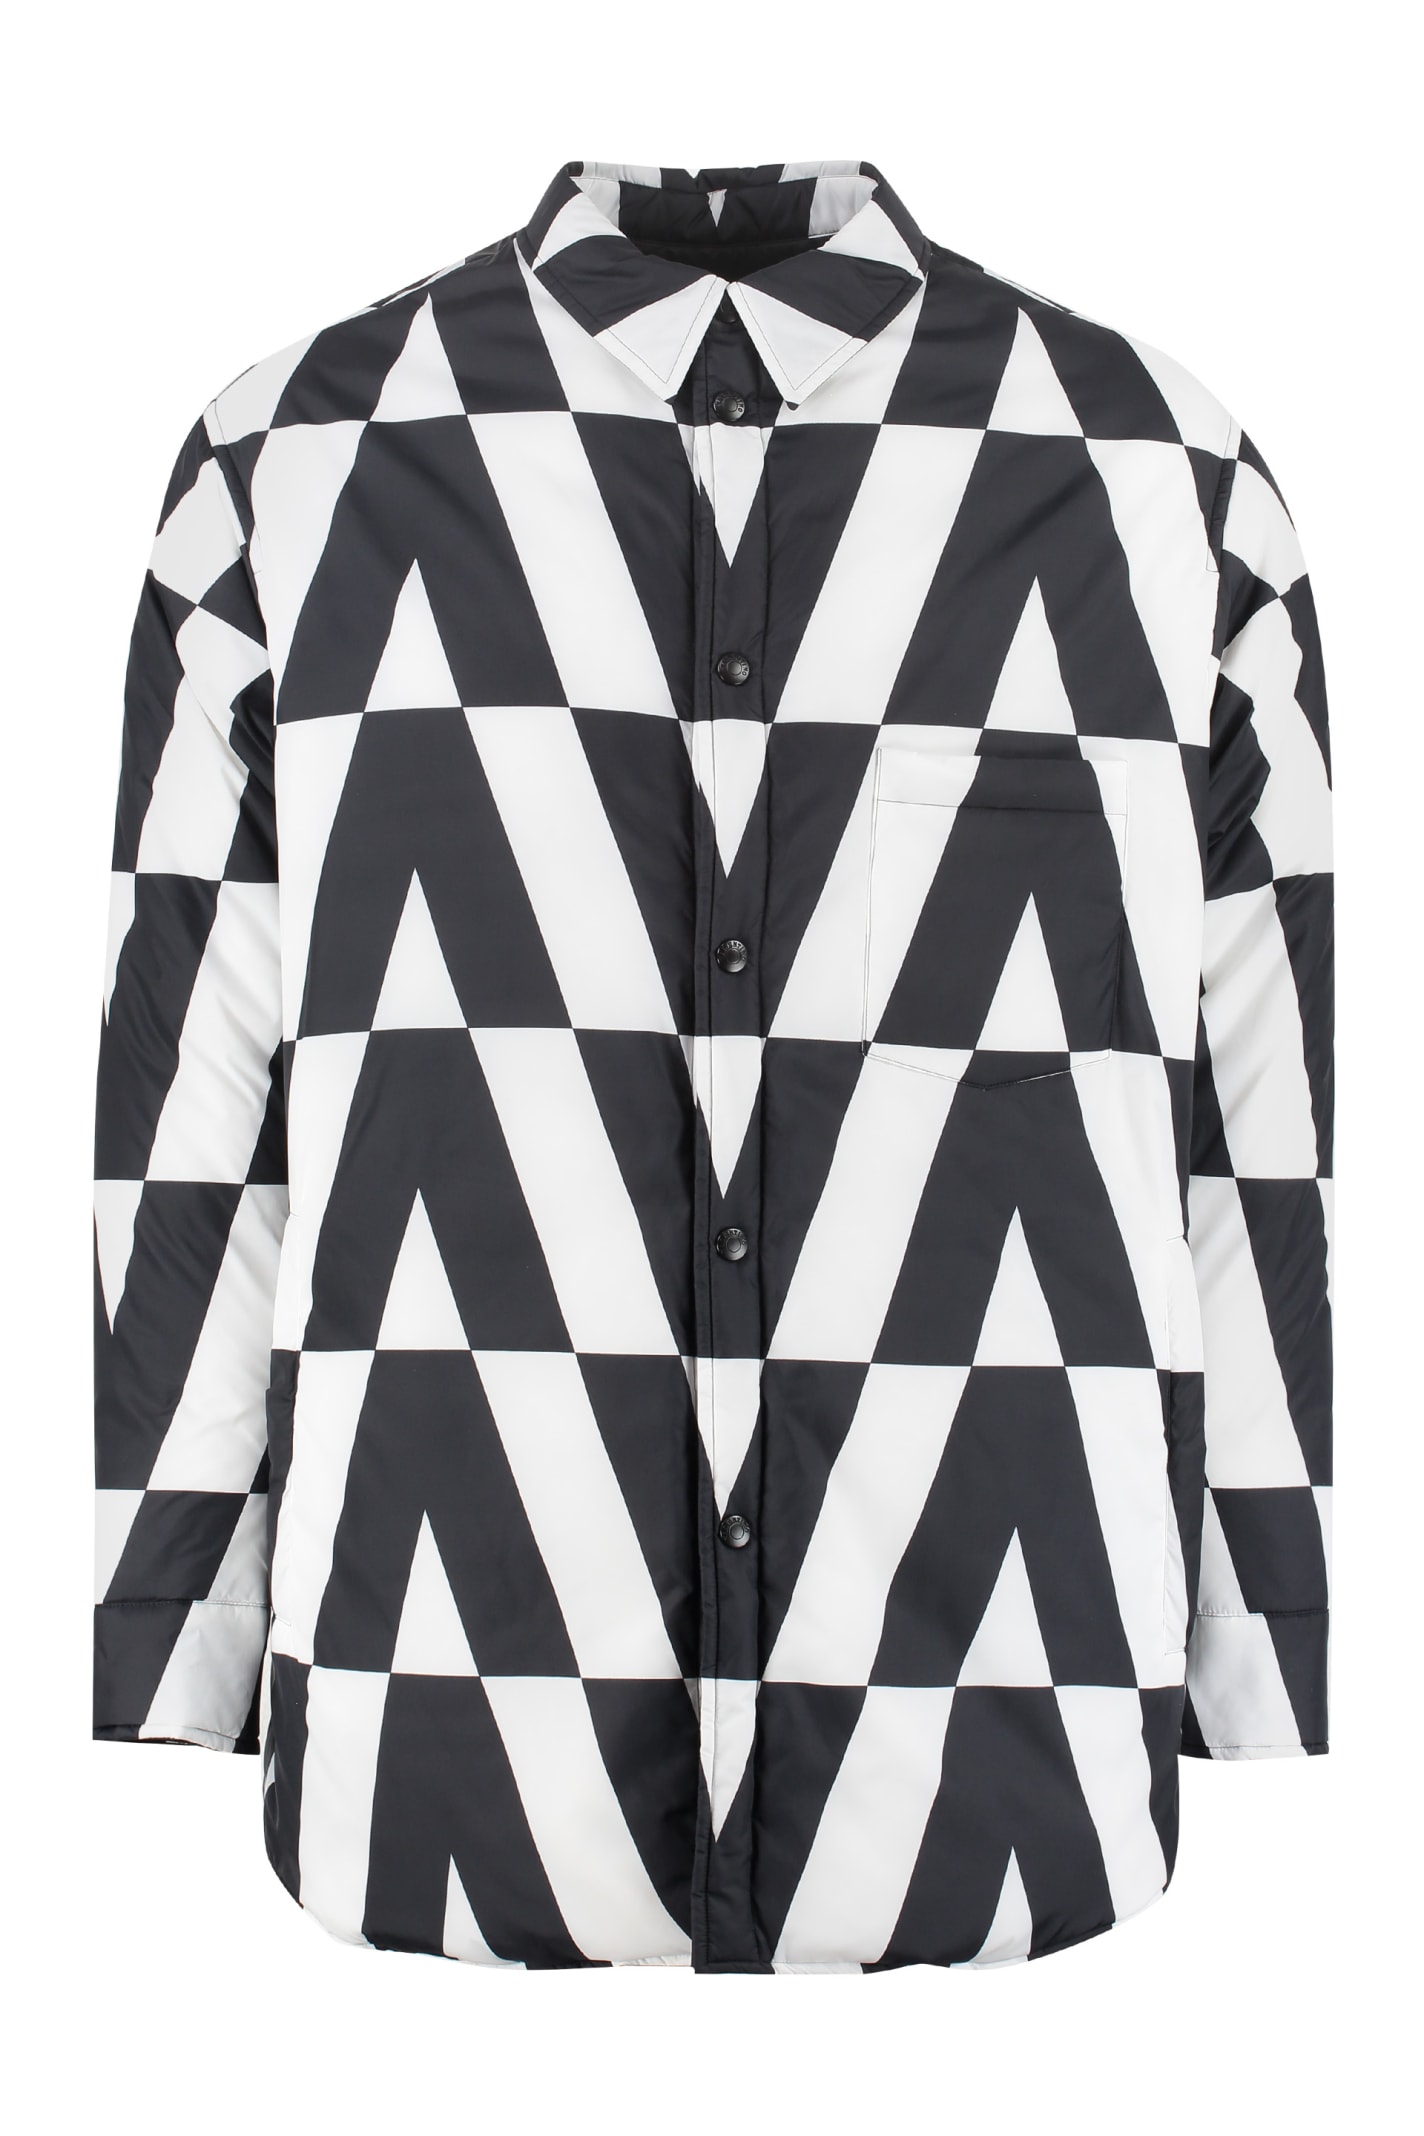 Valentino Printed Reversible Down Jacket